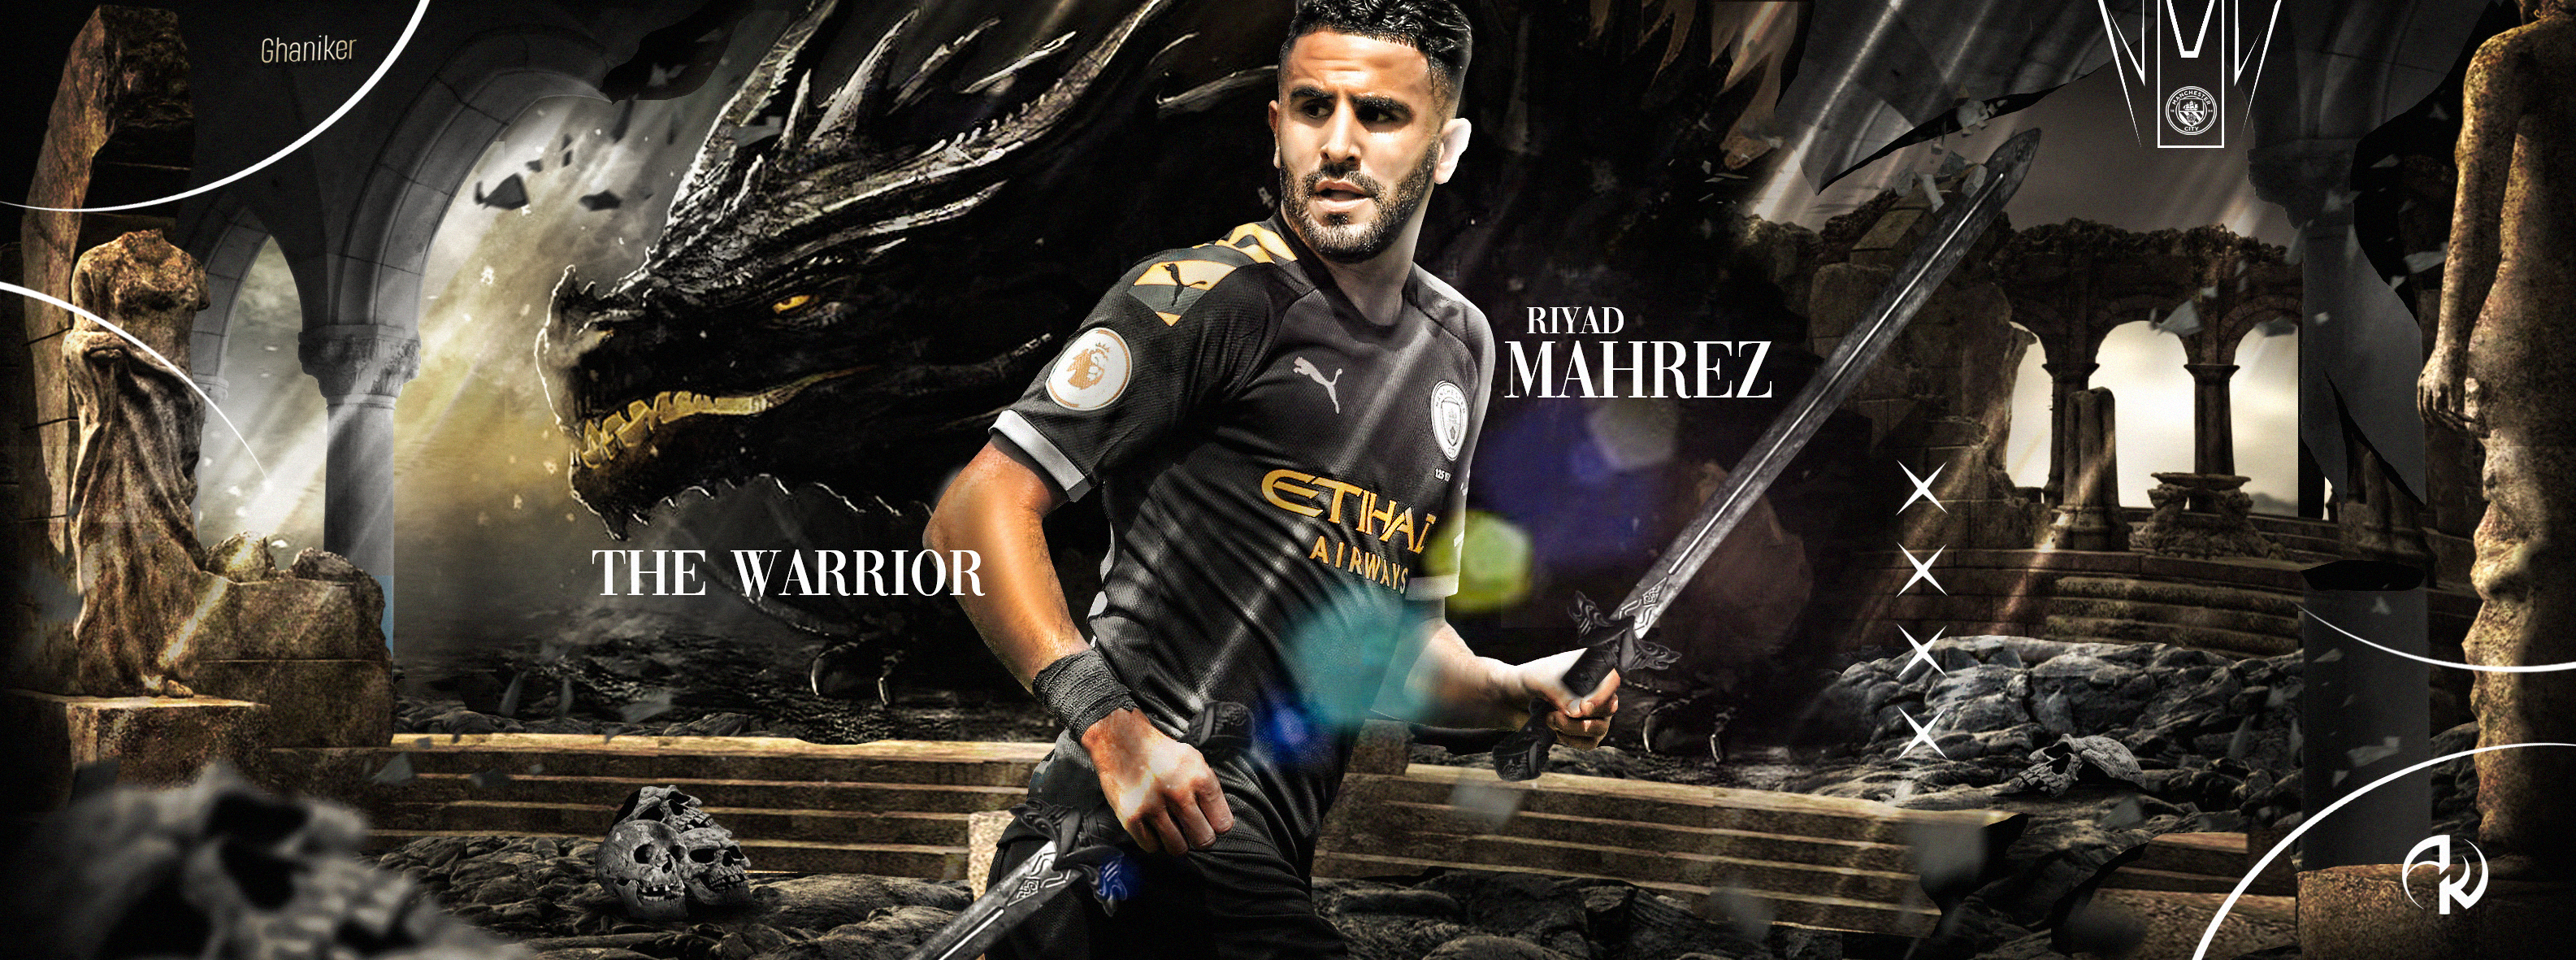 Sports Riyad Mahrez HD Wallpaper | Background Image